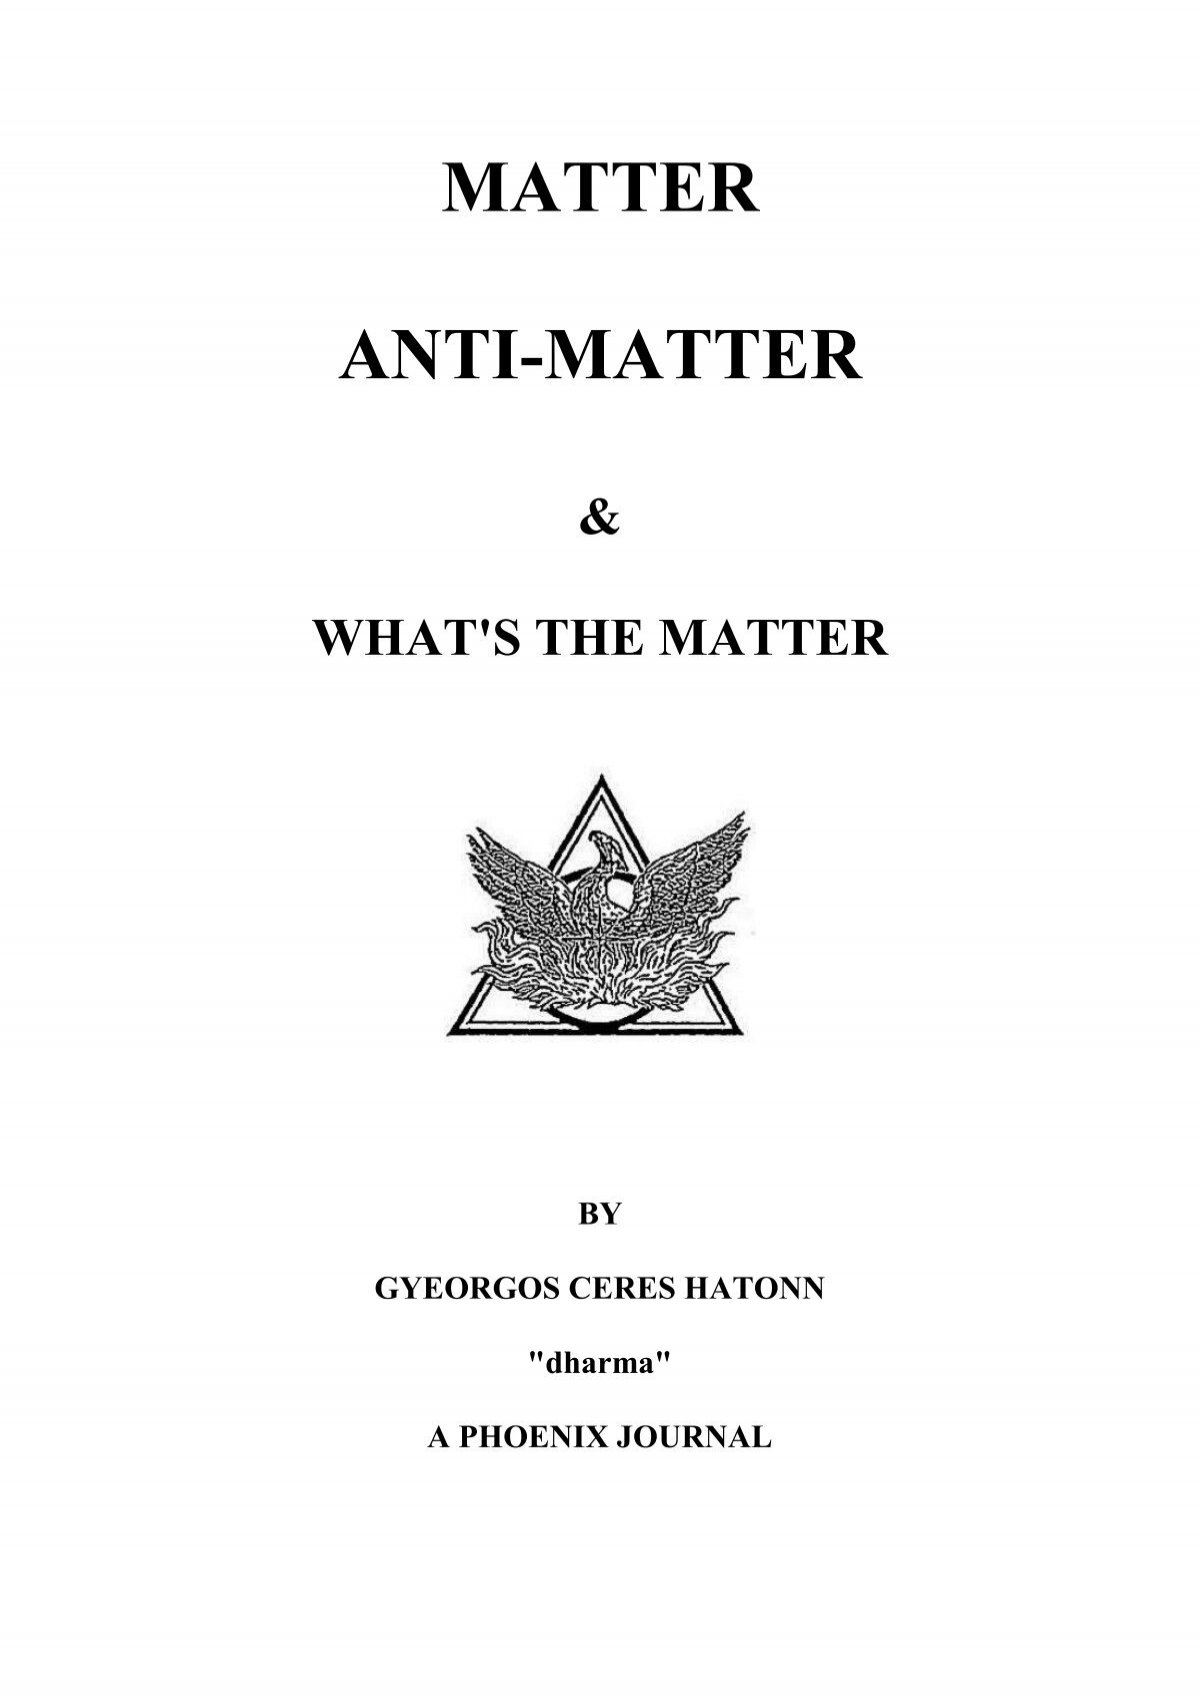 MATTER ANTI-MATTER & WHAT'S THE MATTER - Phoenix Source